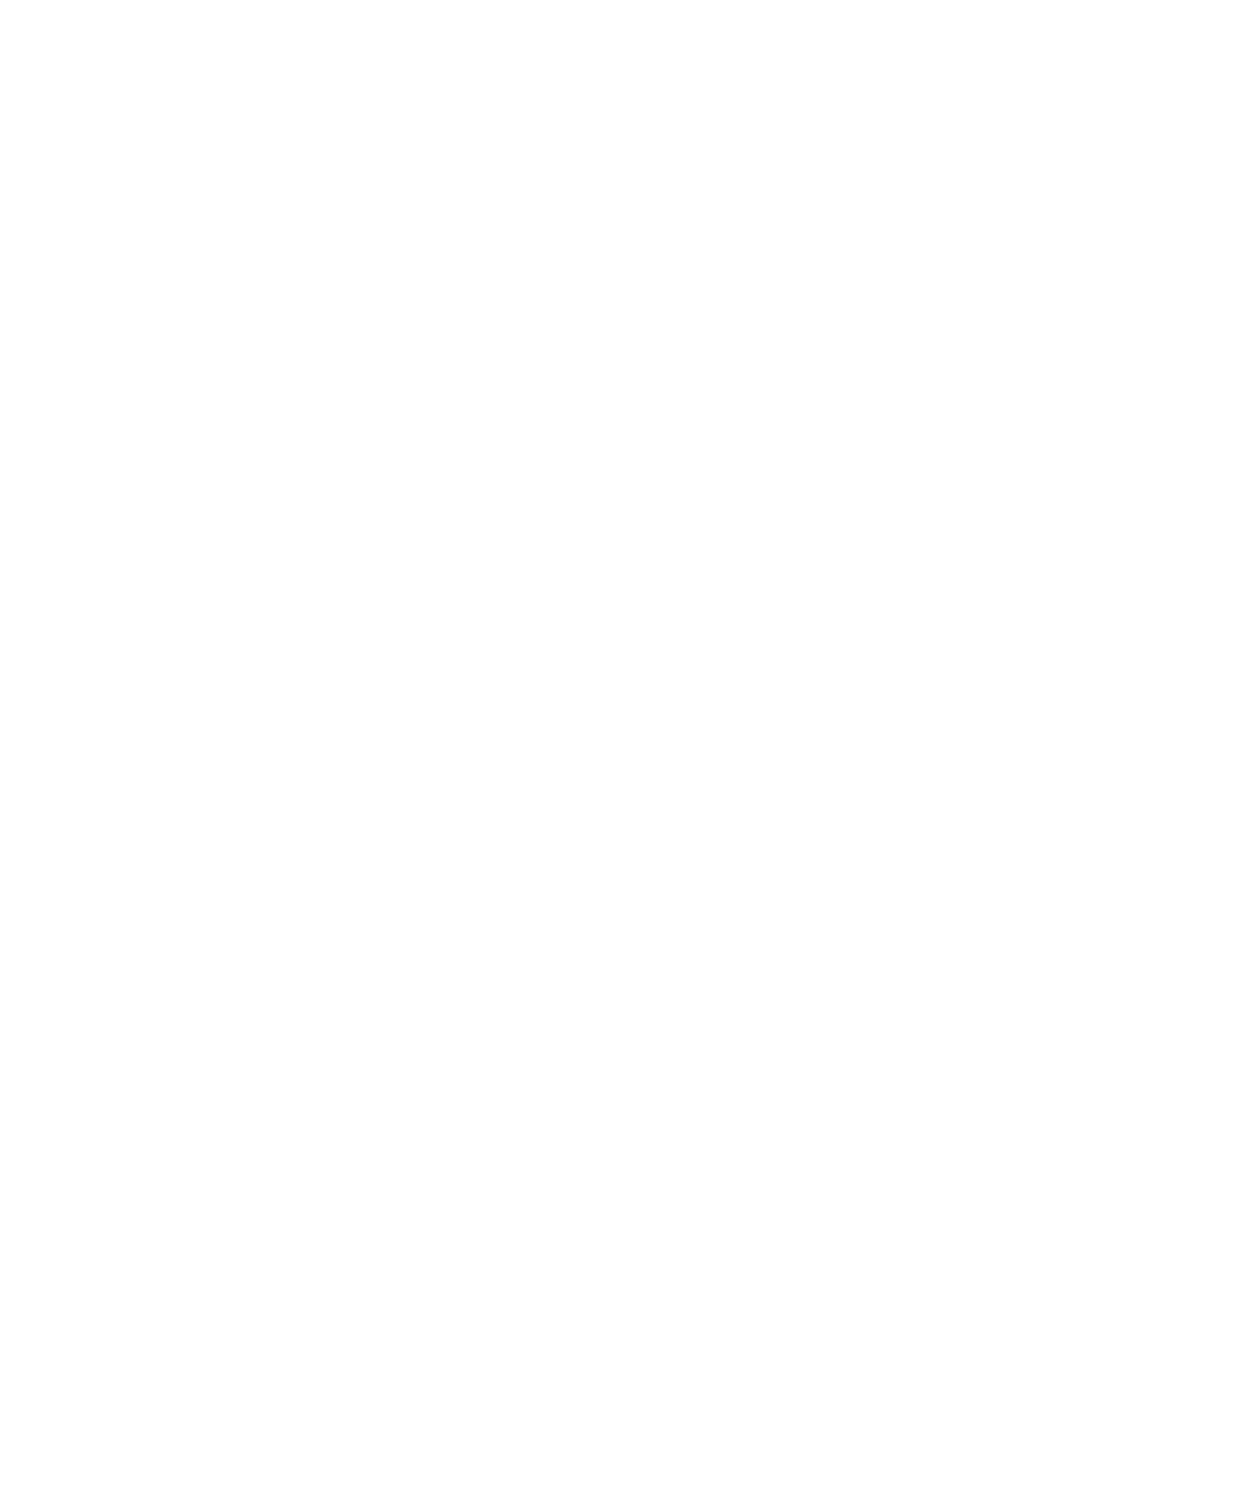 Thunderful Group logo for dark backgrounds (transparent PNG)